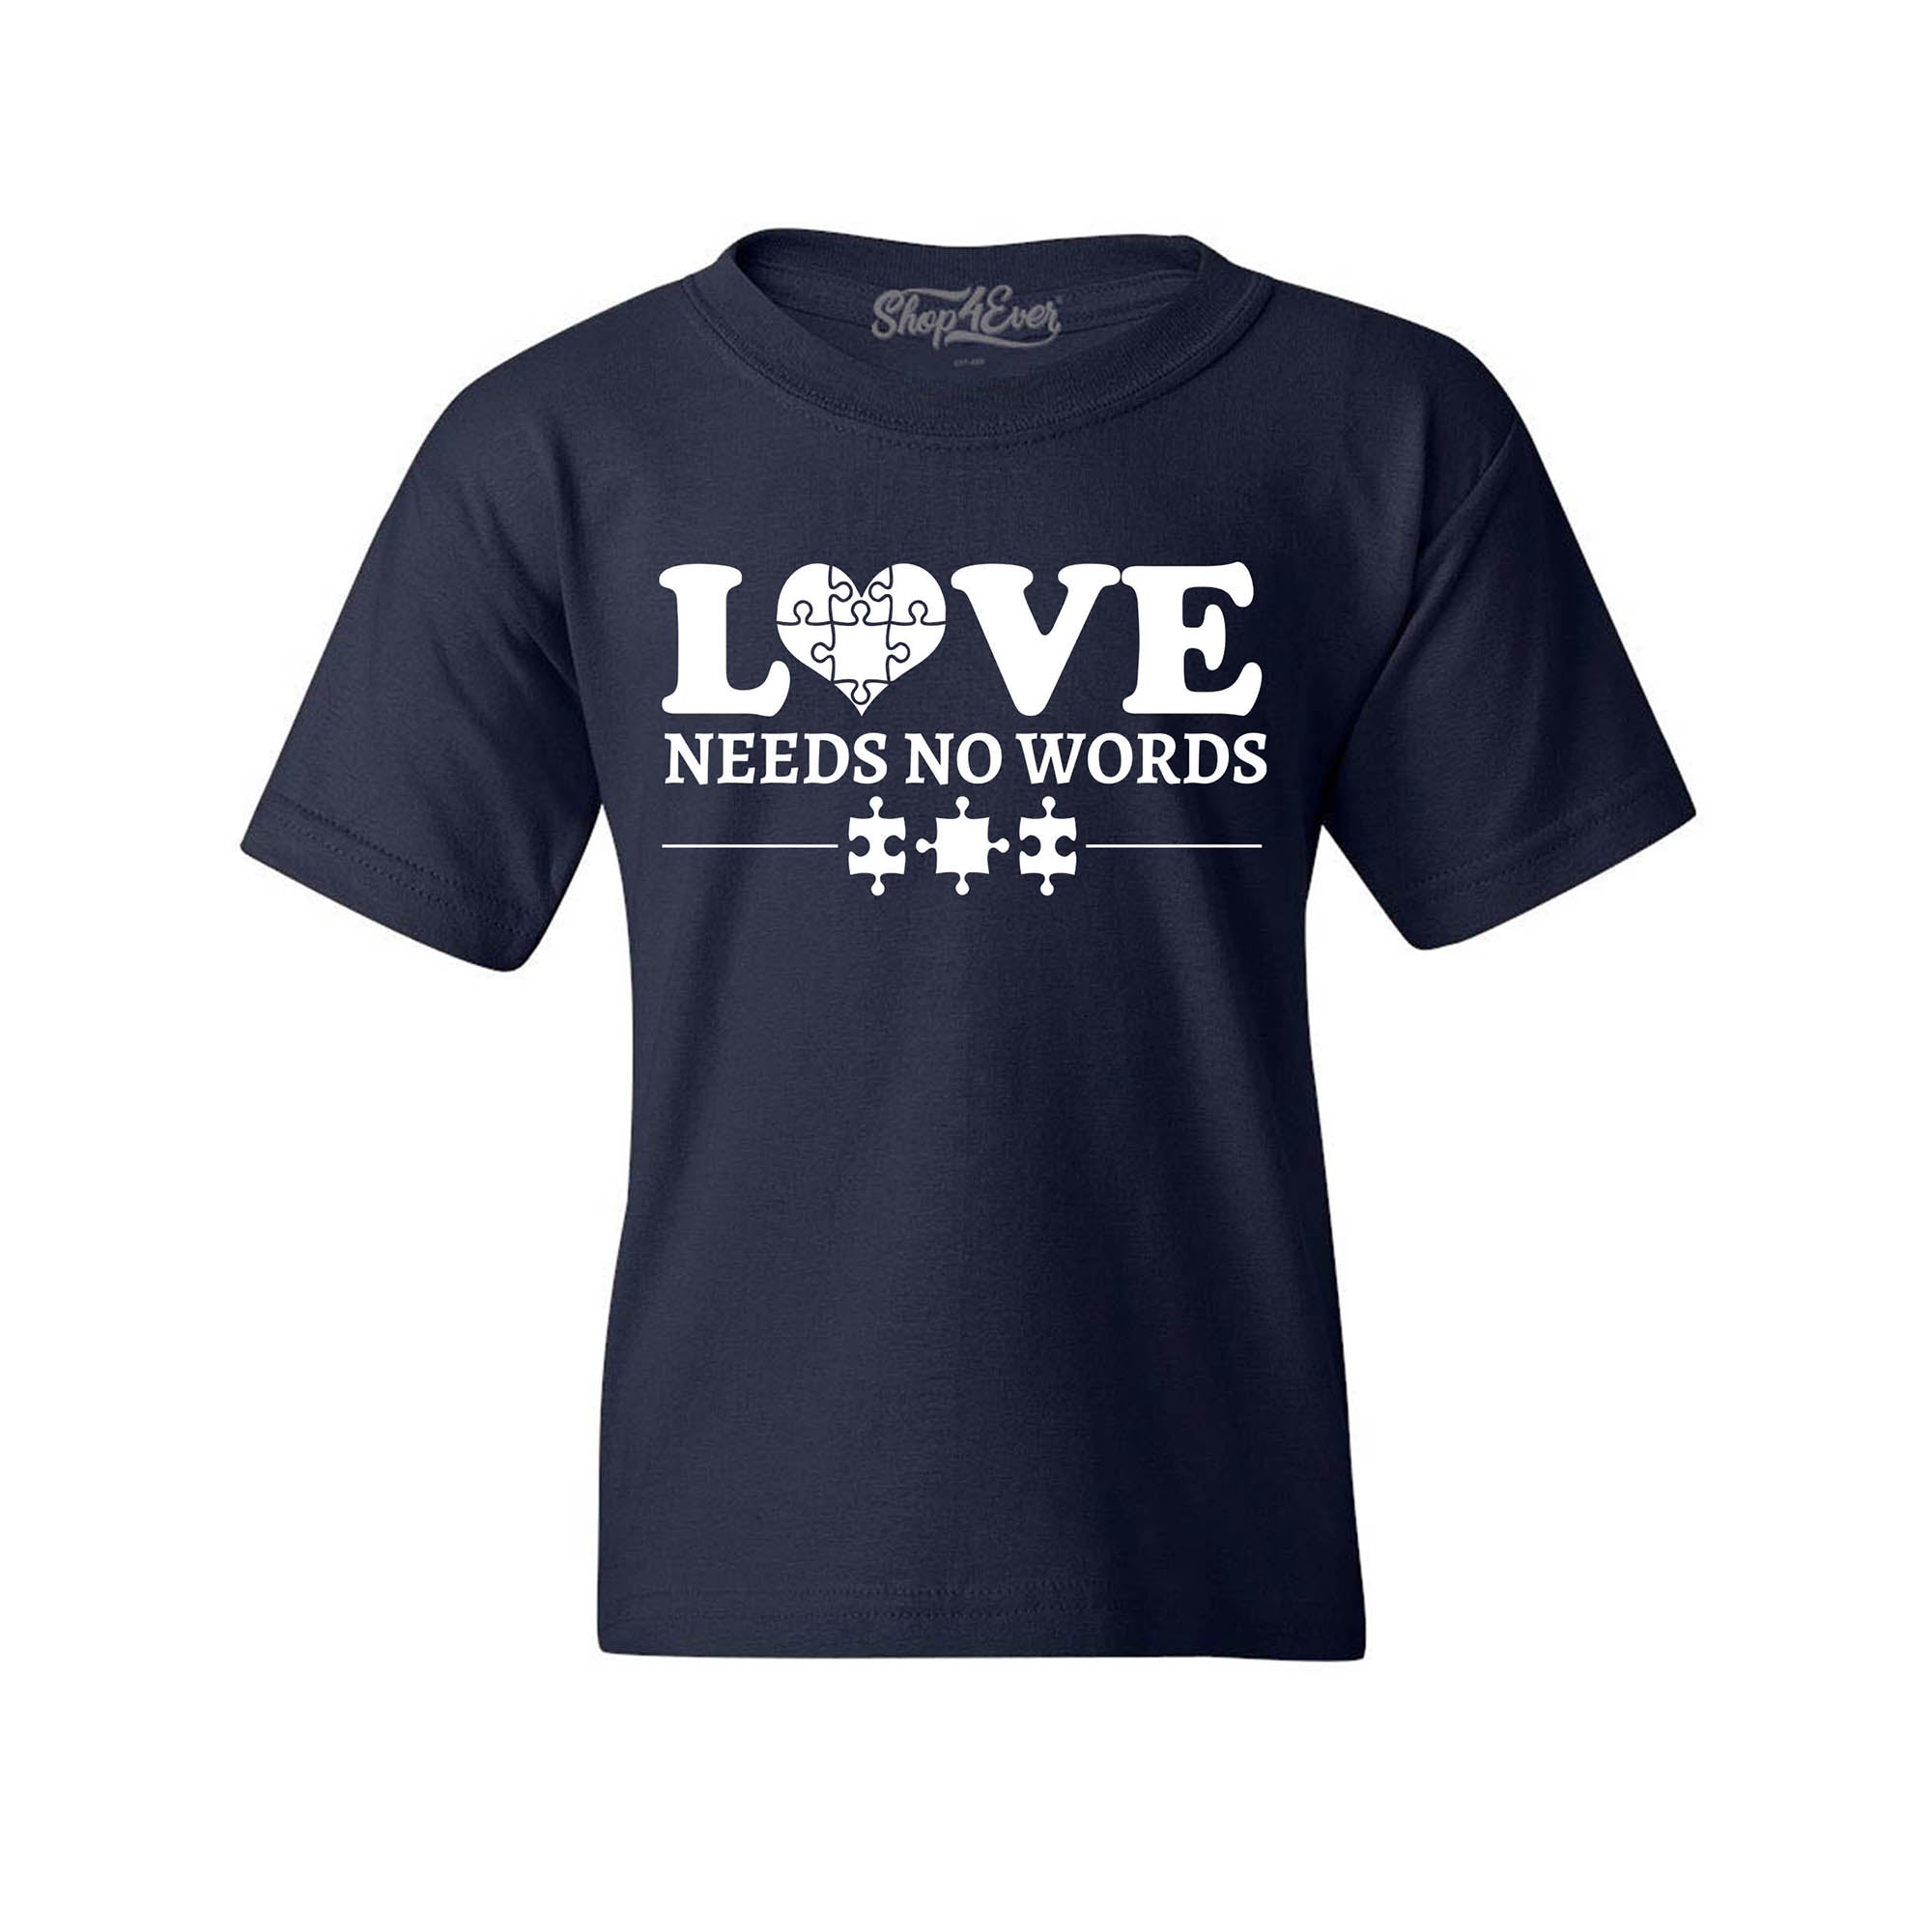 Love Needs No Words Autism Awareness Child's T-Shirt Kids Tee